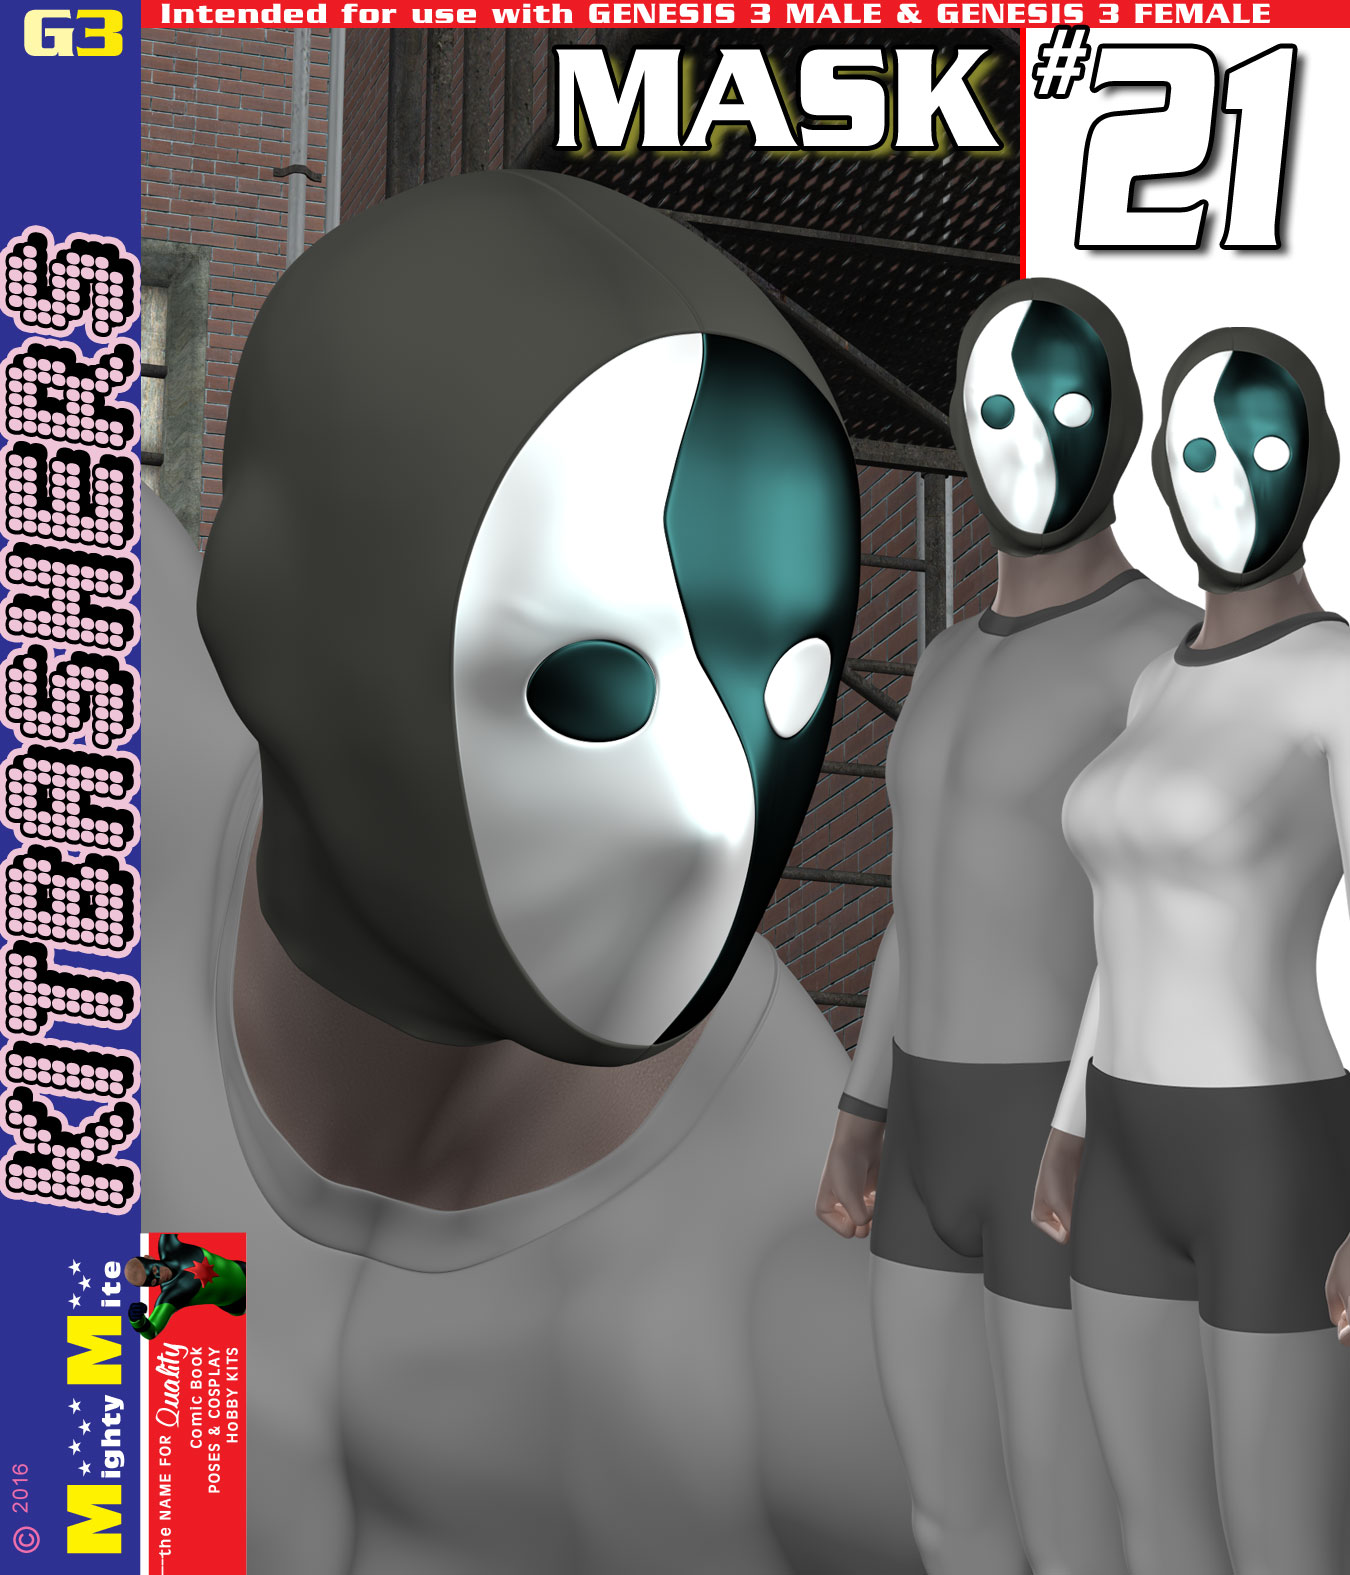 Mask 021 MMKBG3 by: MightyMite, 3D Models by Daz 3D